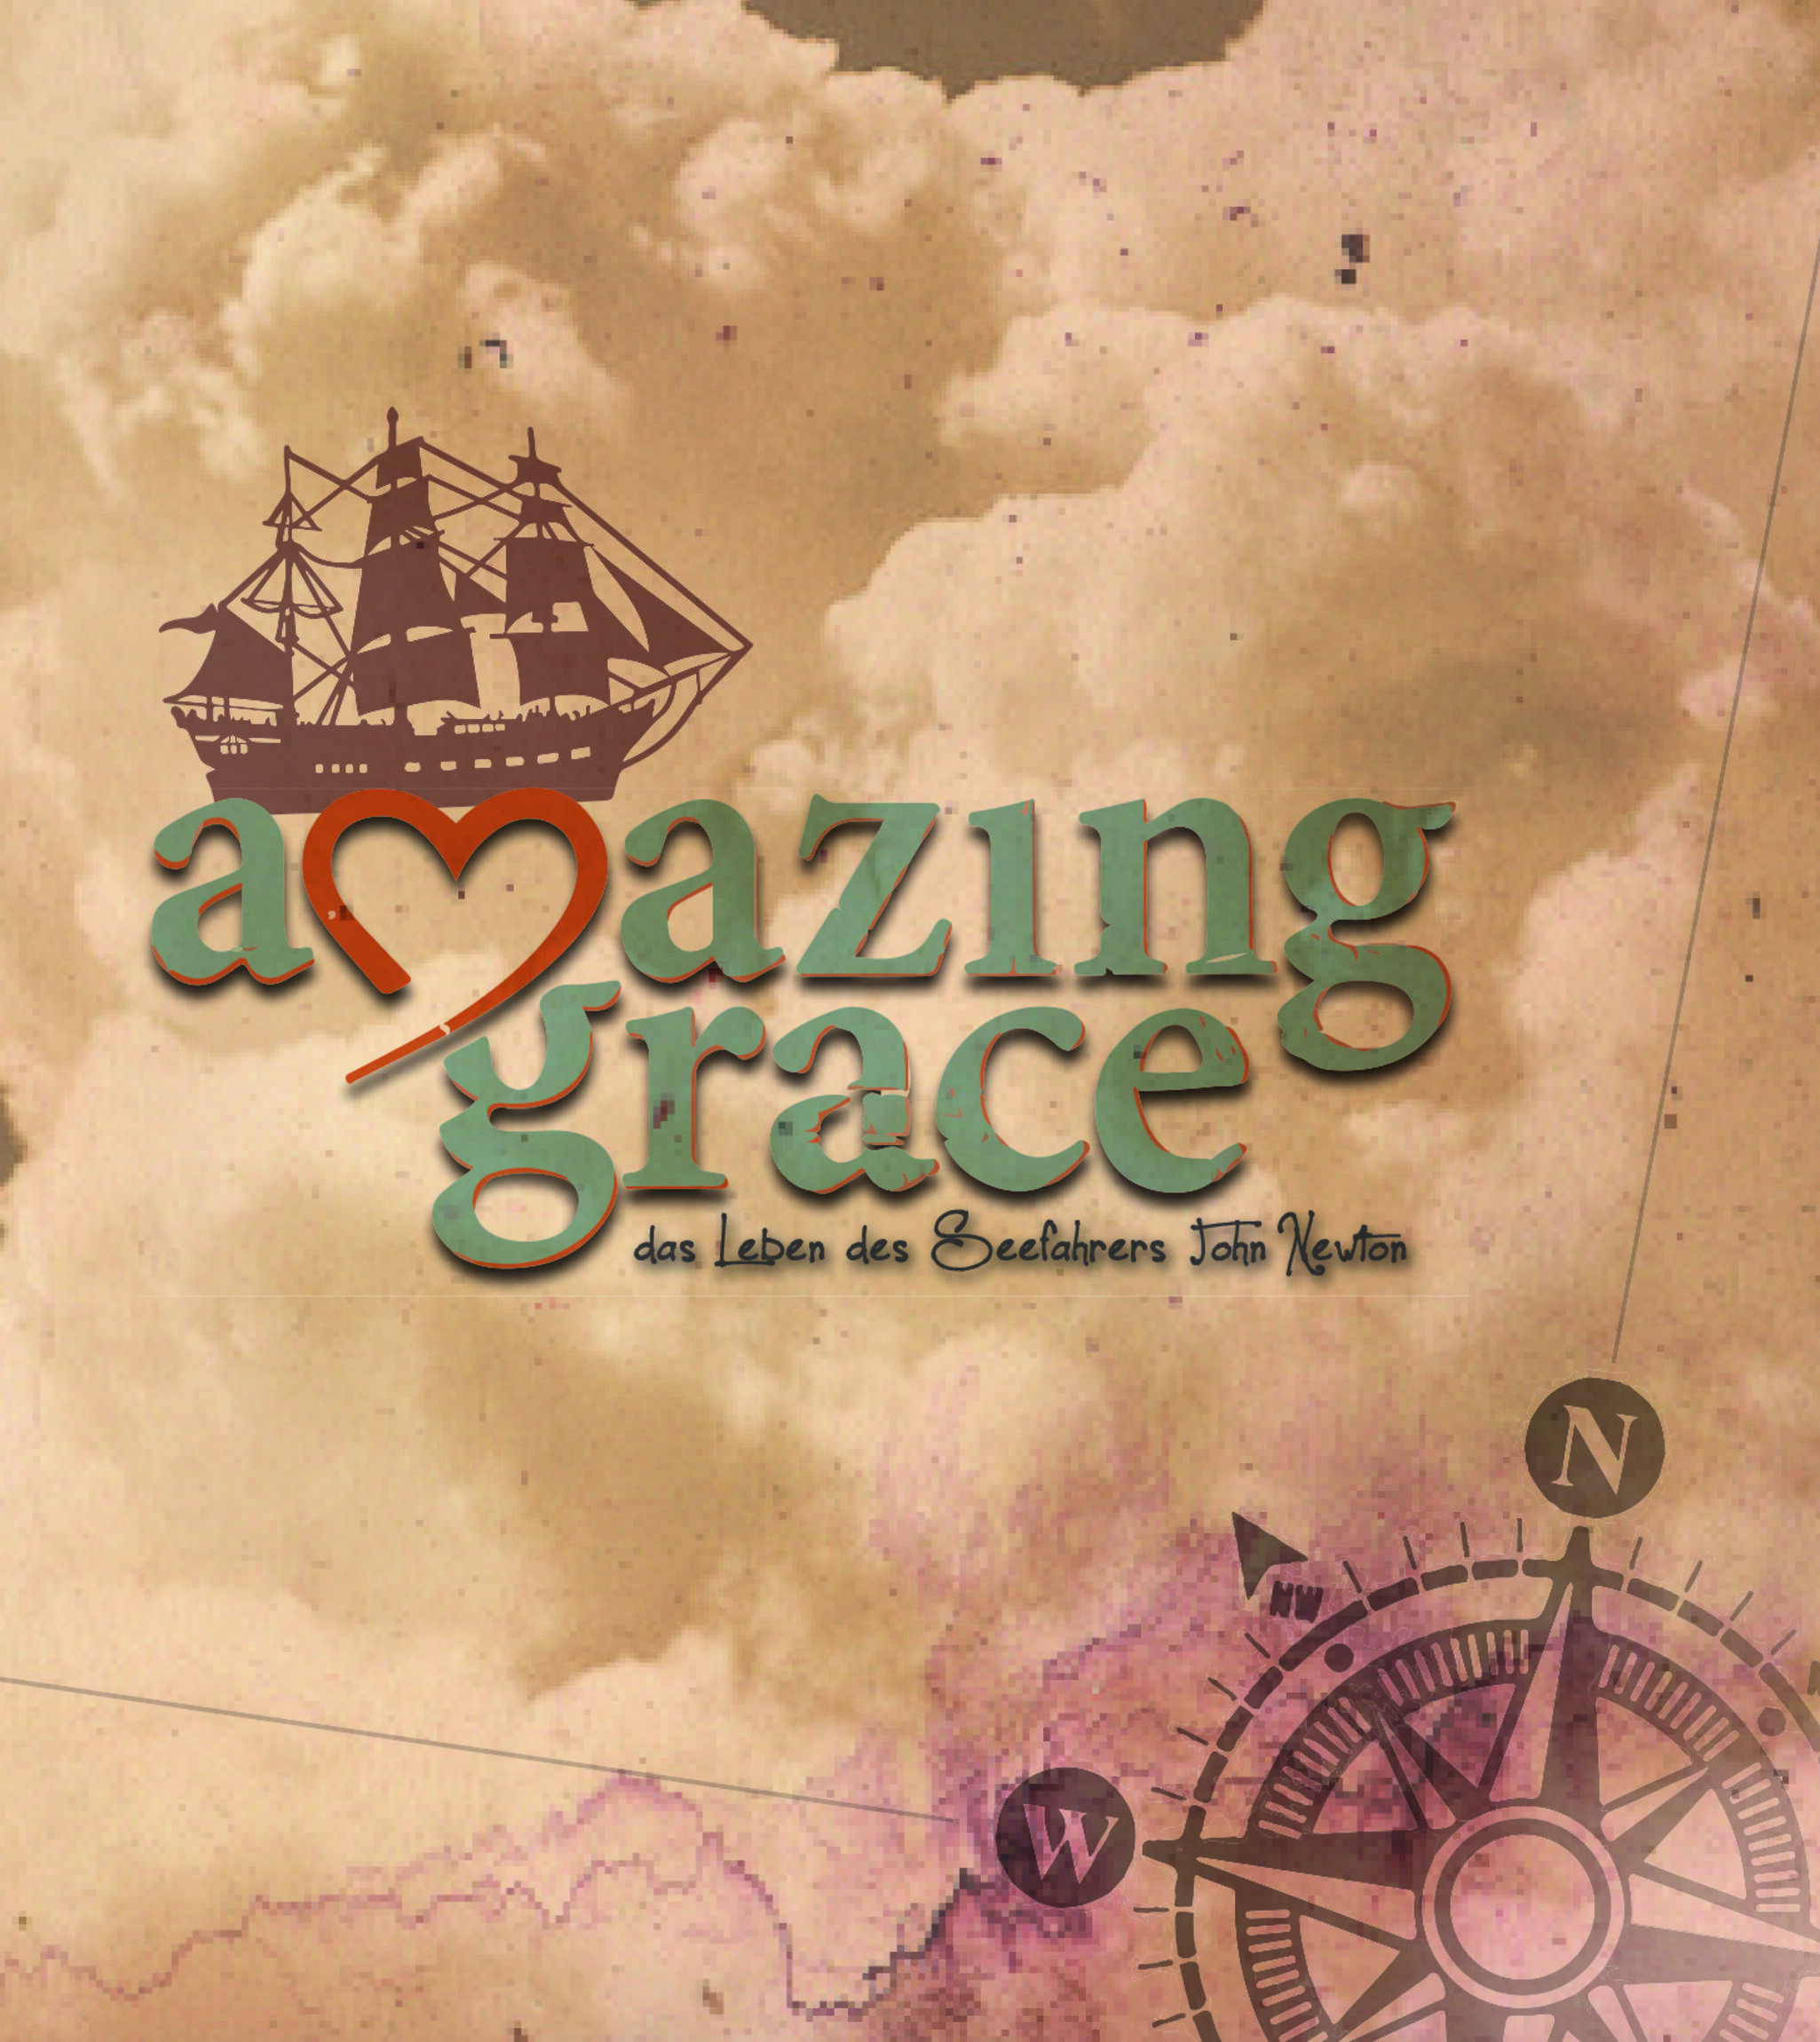 2015-06-24amazing grace